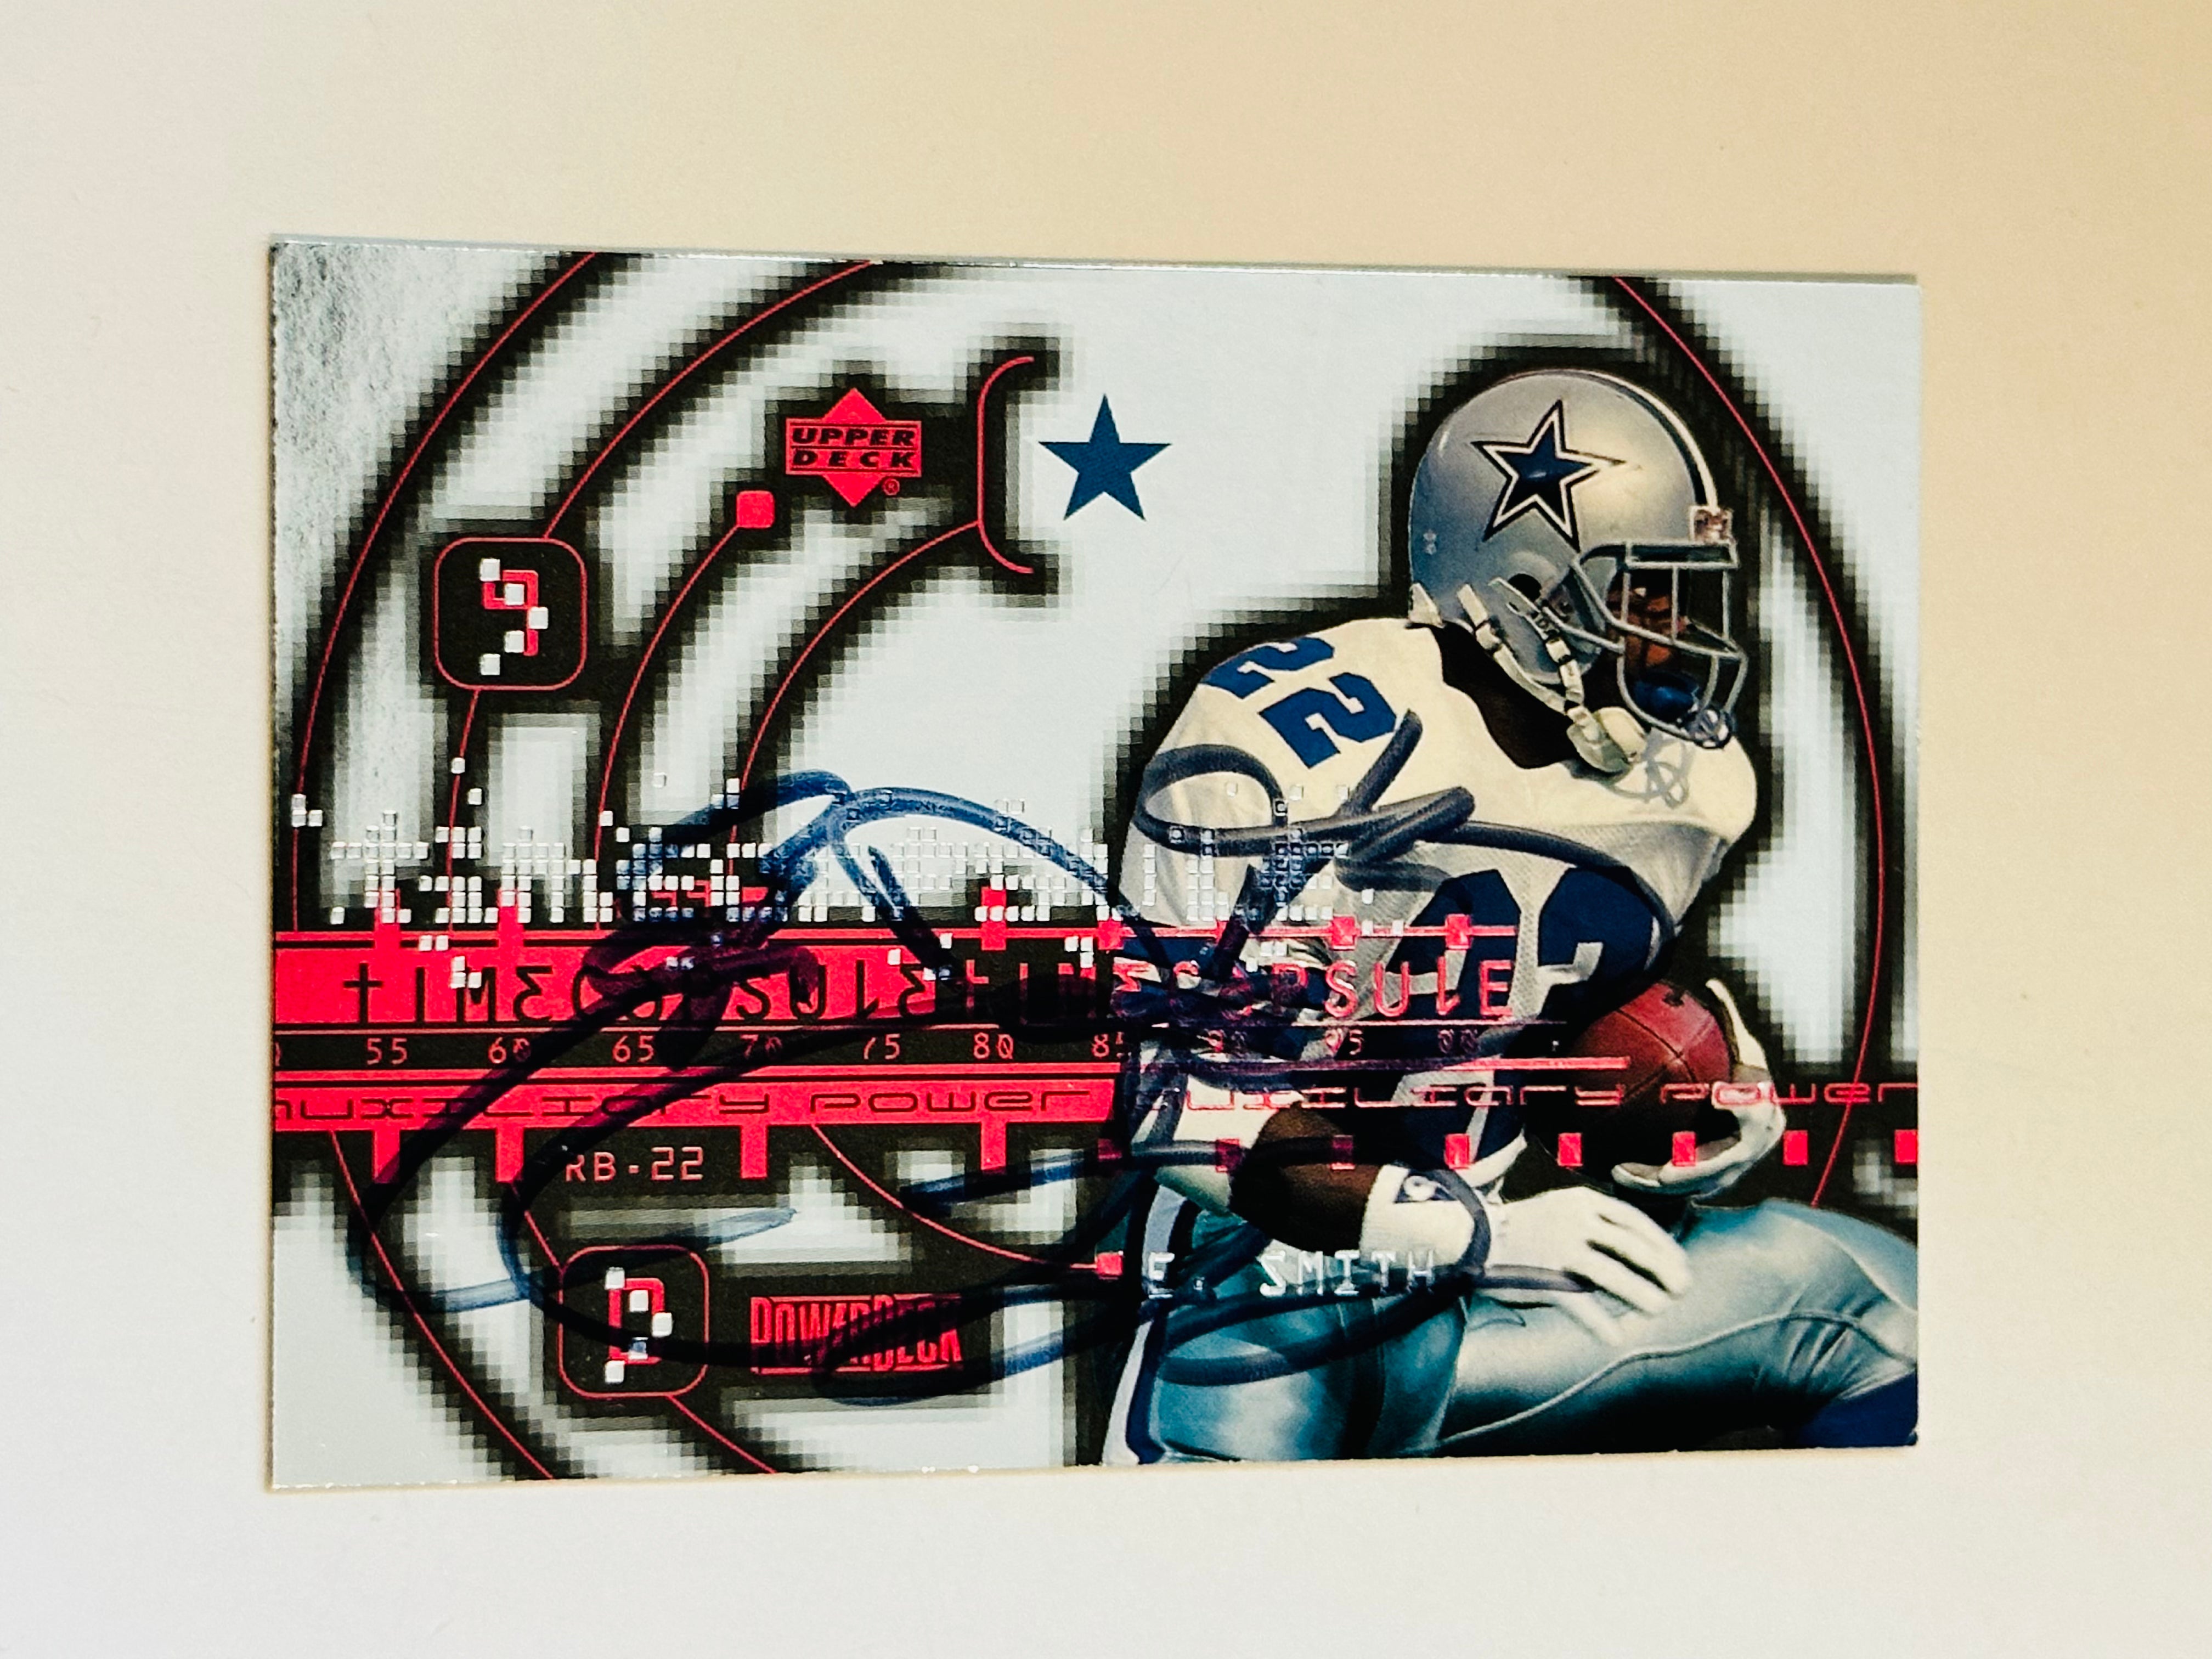 Dallas Cowboys Emmitt Smith autographed football card with COA